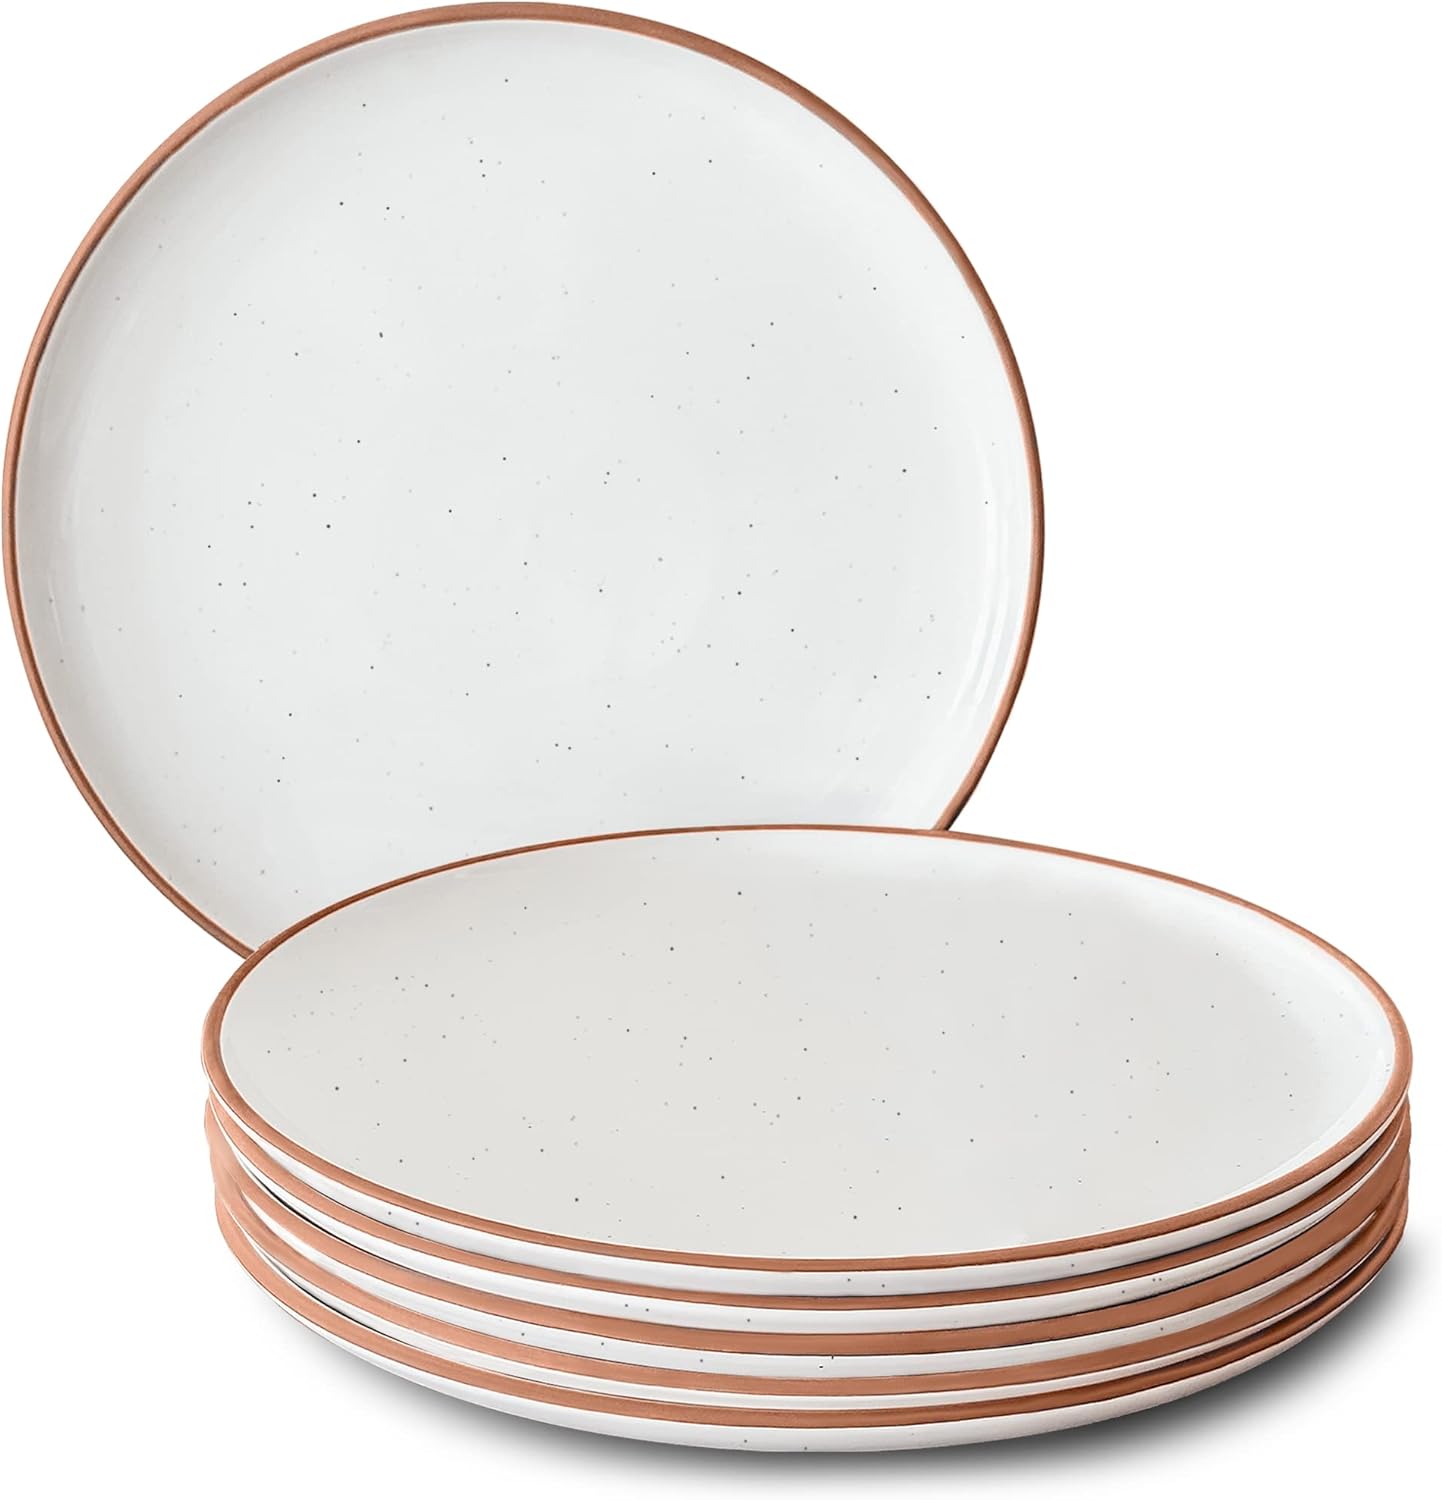 Mora Ceramic Dinner Plates Set of 6, 10-inch Dish Set